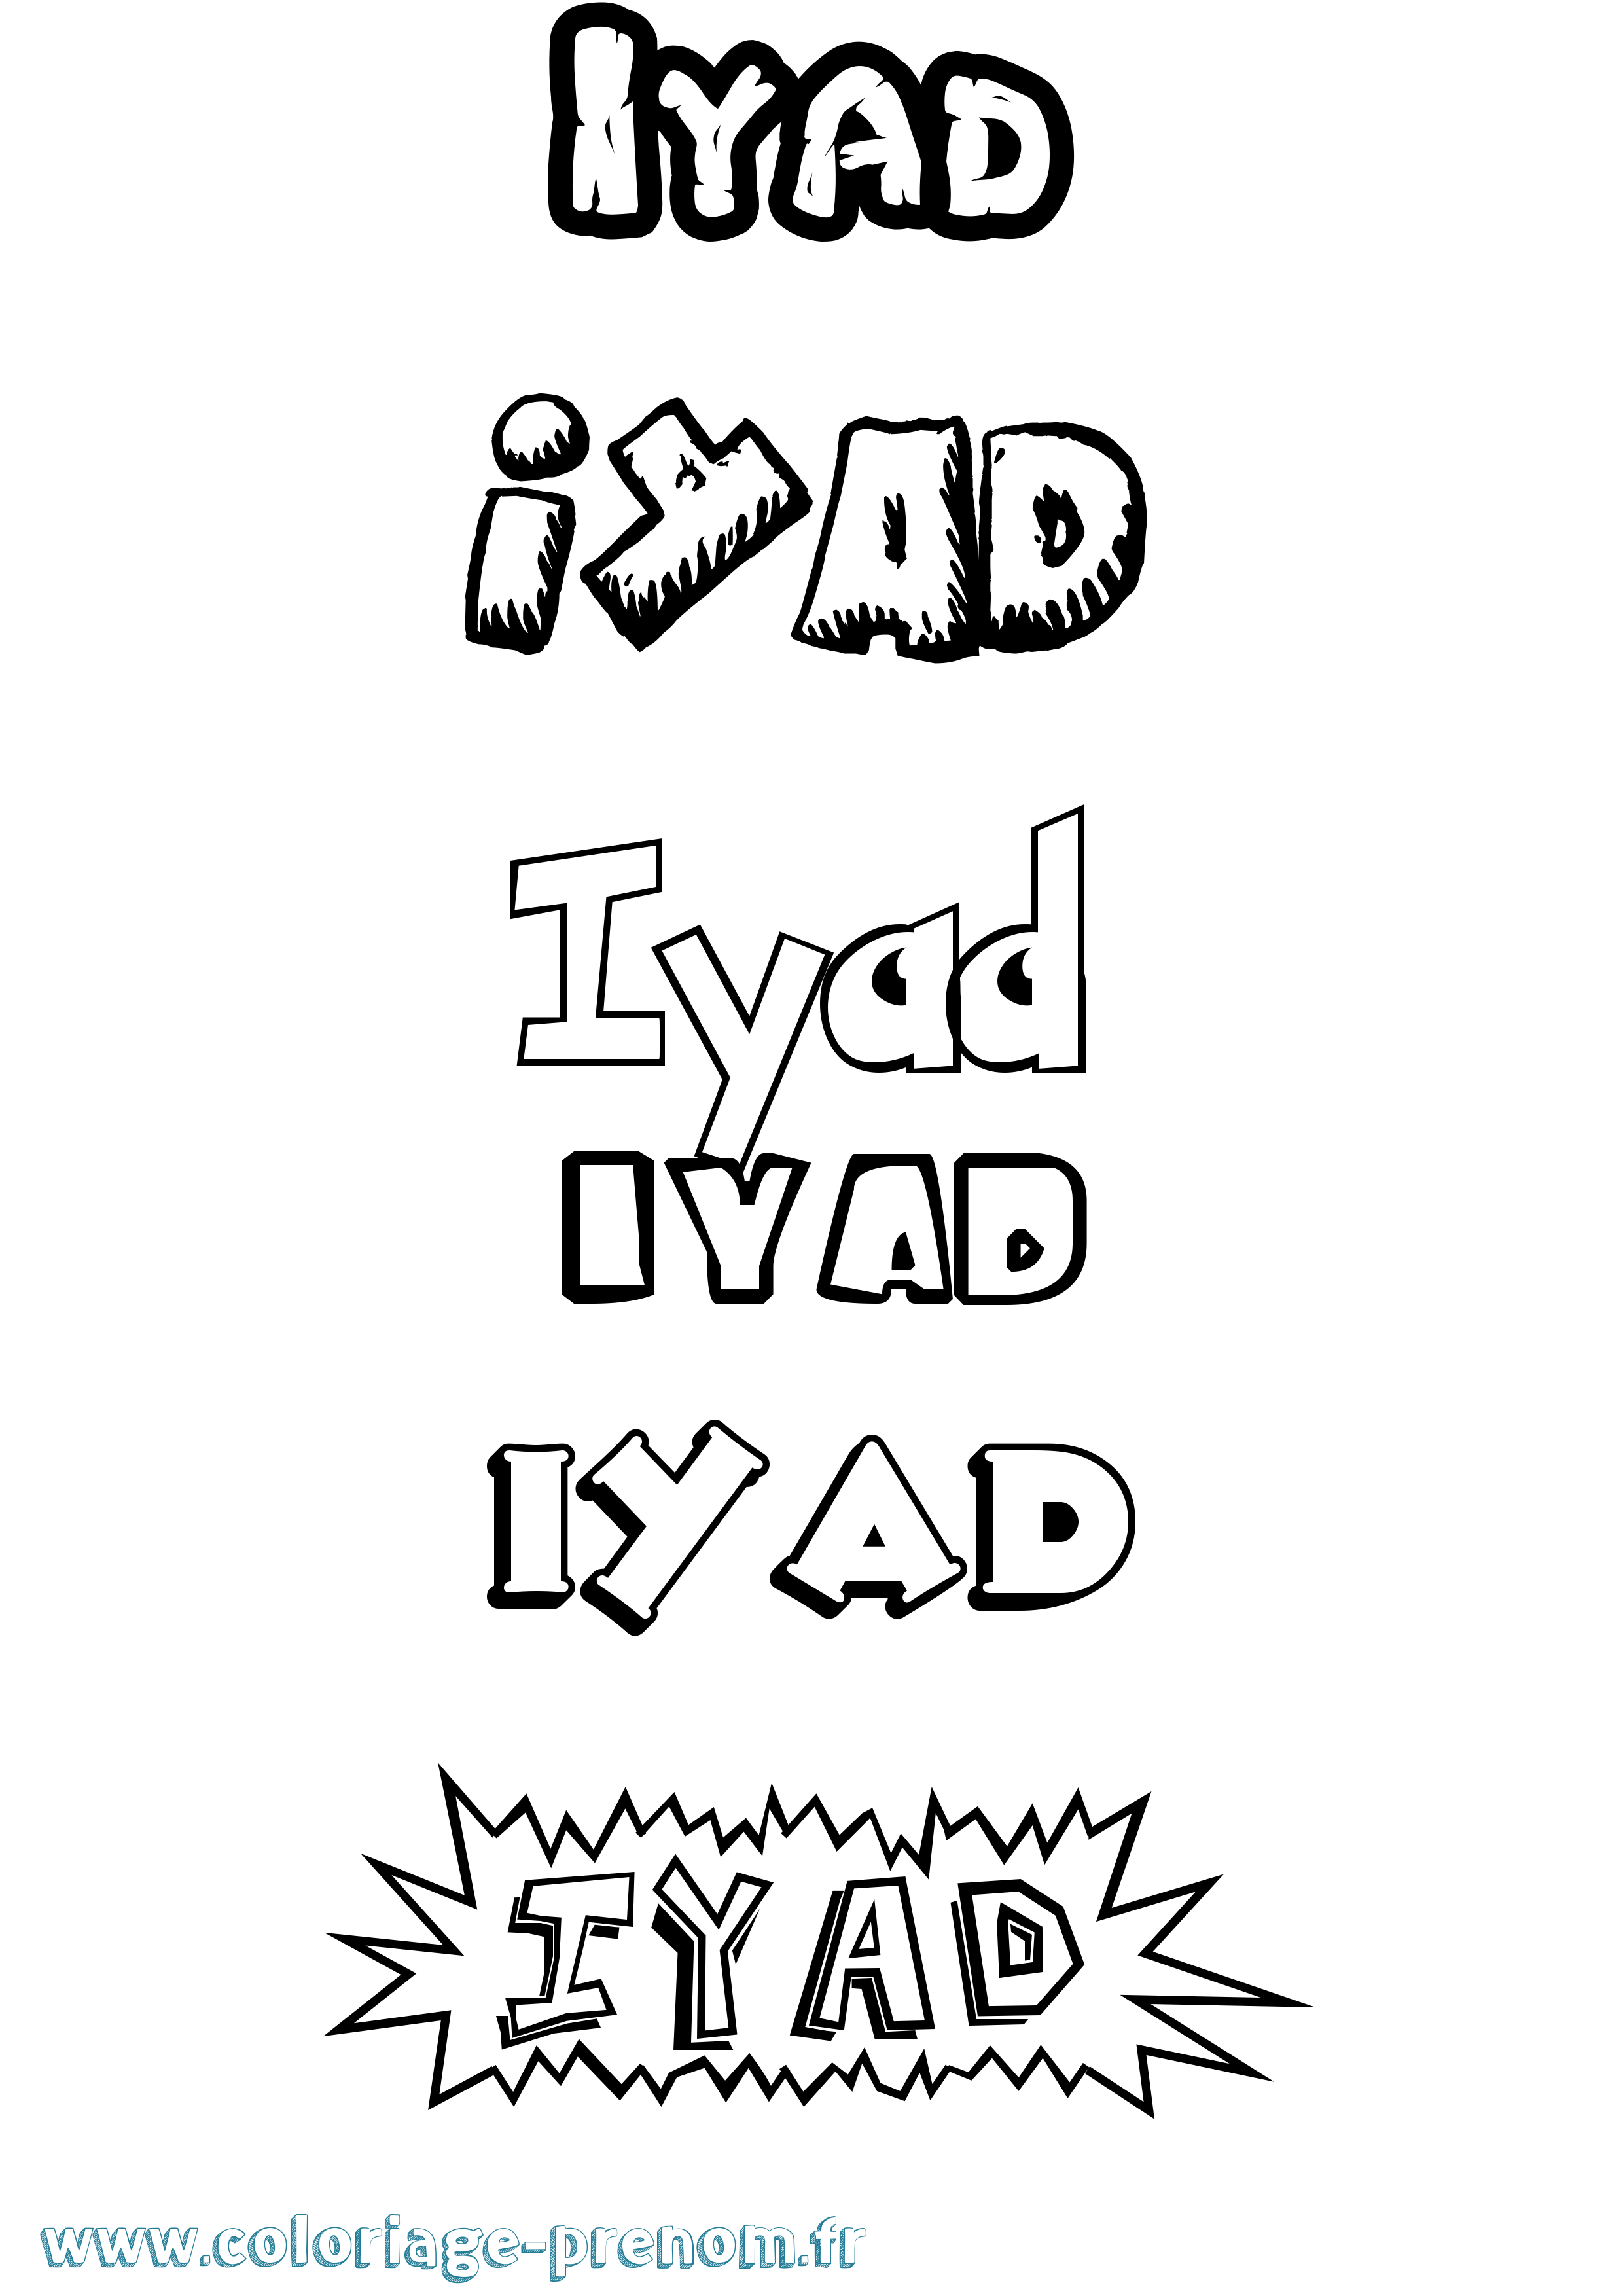 Coloriage prénom Iyad